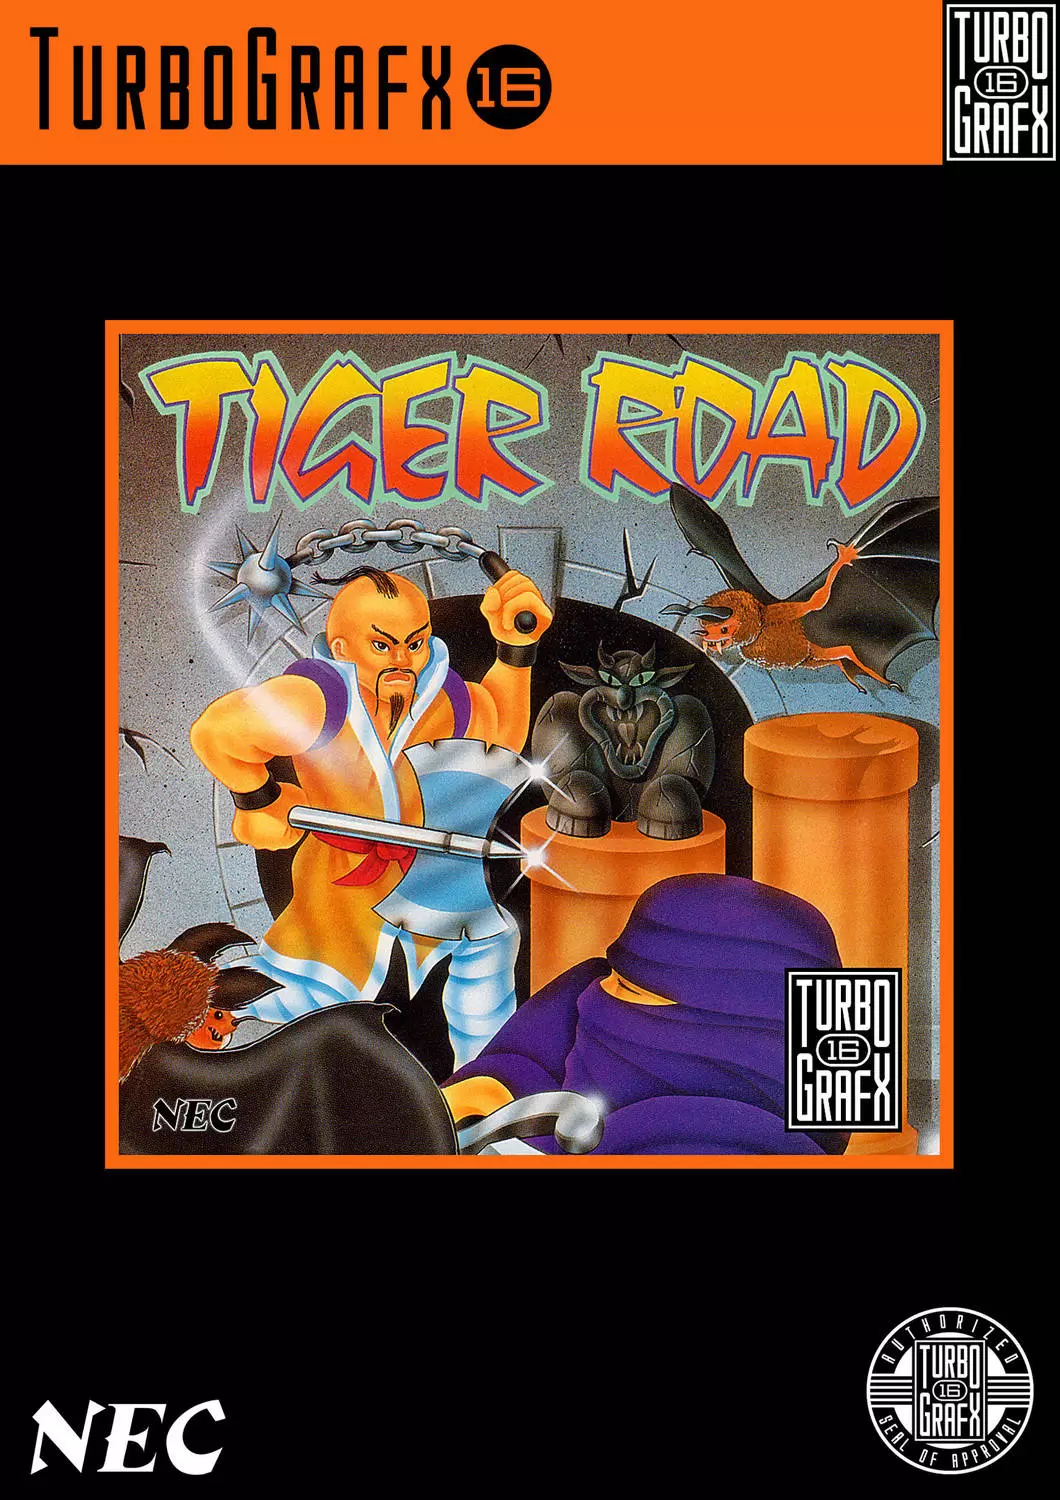 Turbo Grafx 16 (PC Engine) - Tiger Road